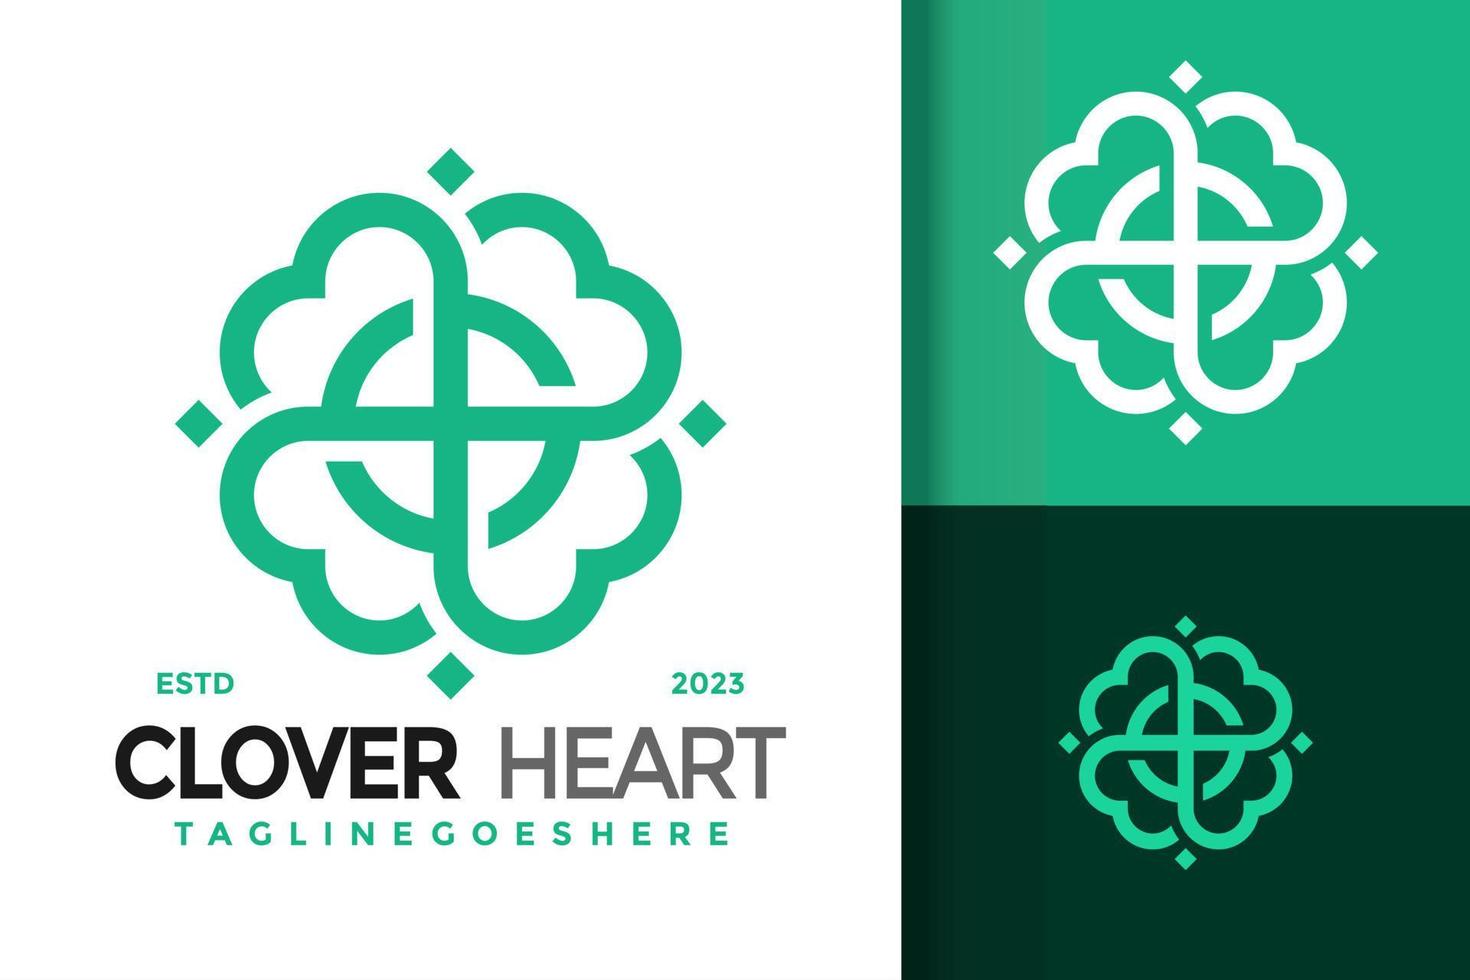 Nature clover heart logo vector icon illustration